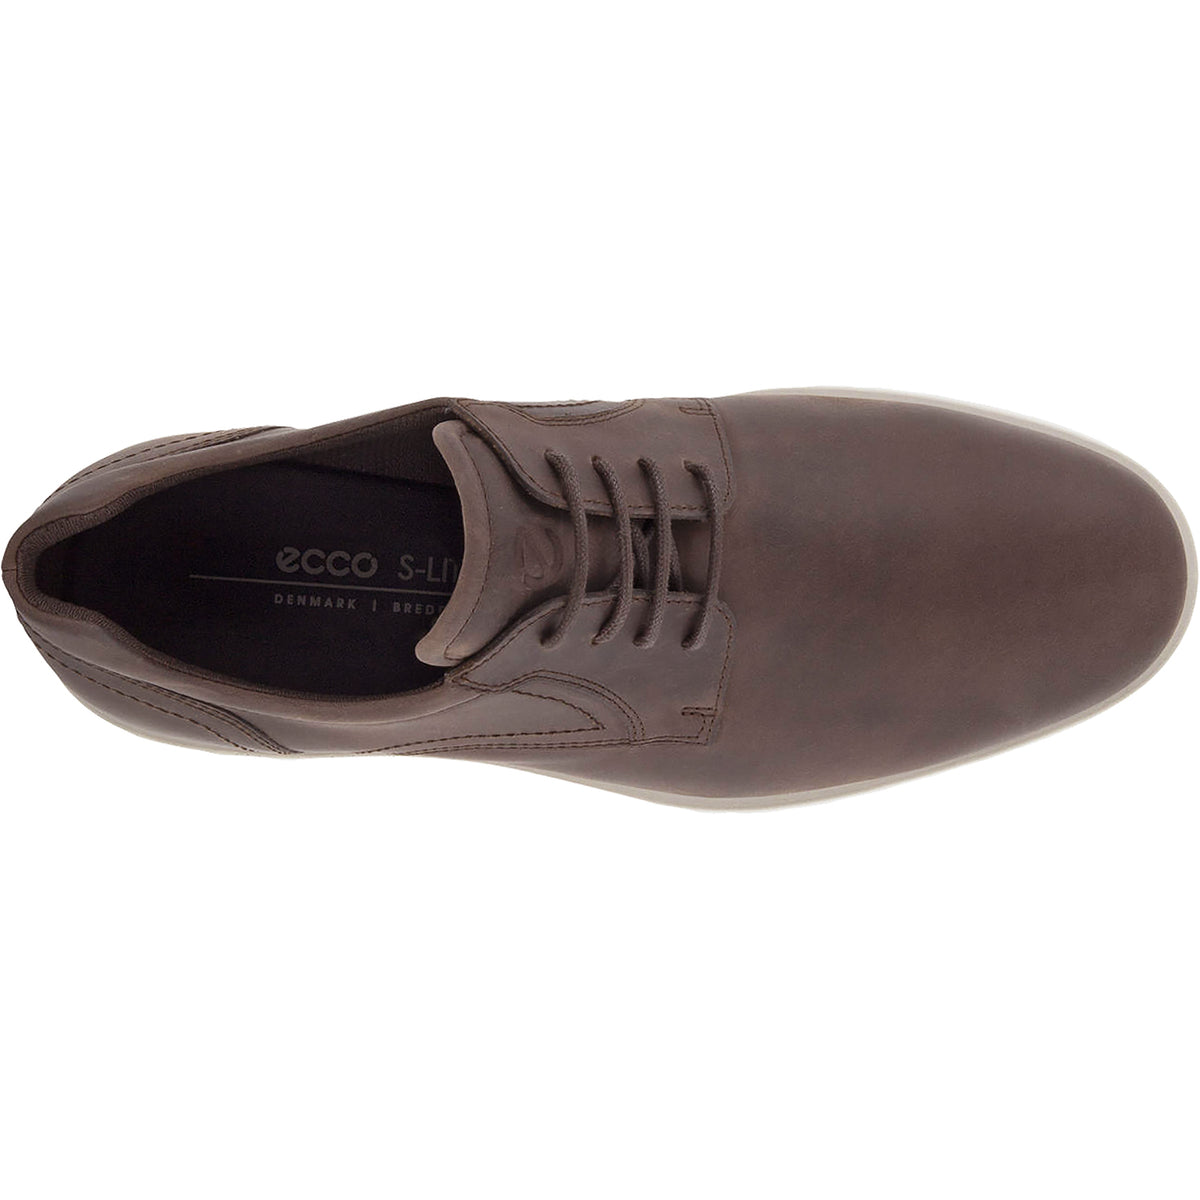 Ecco S Lite Hybrid Derby | Men's Casual Shoes | Footwear etc.